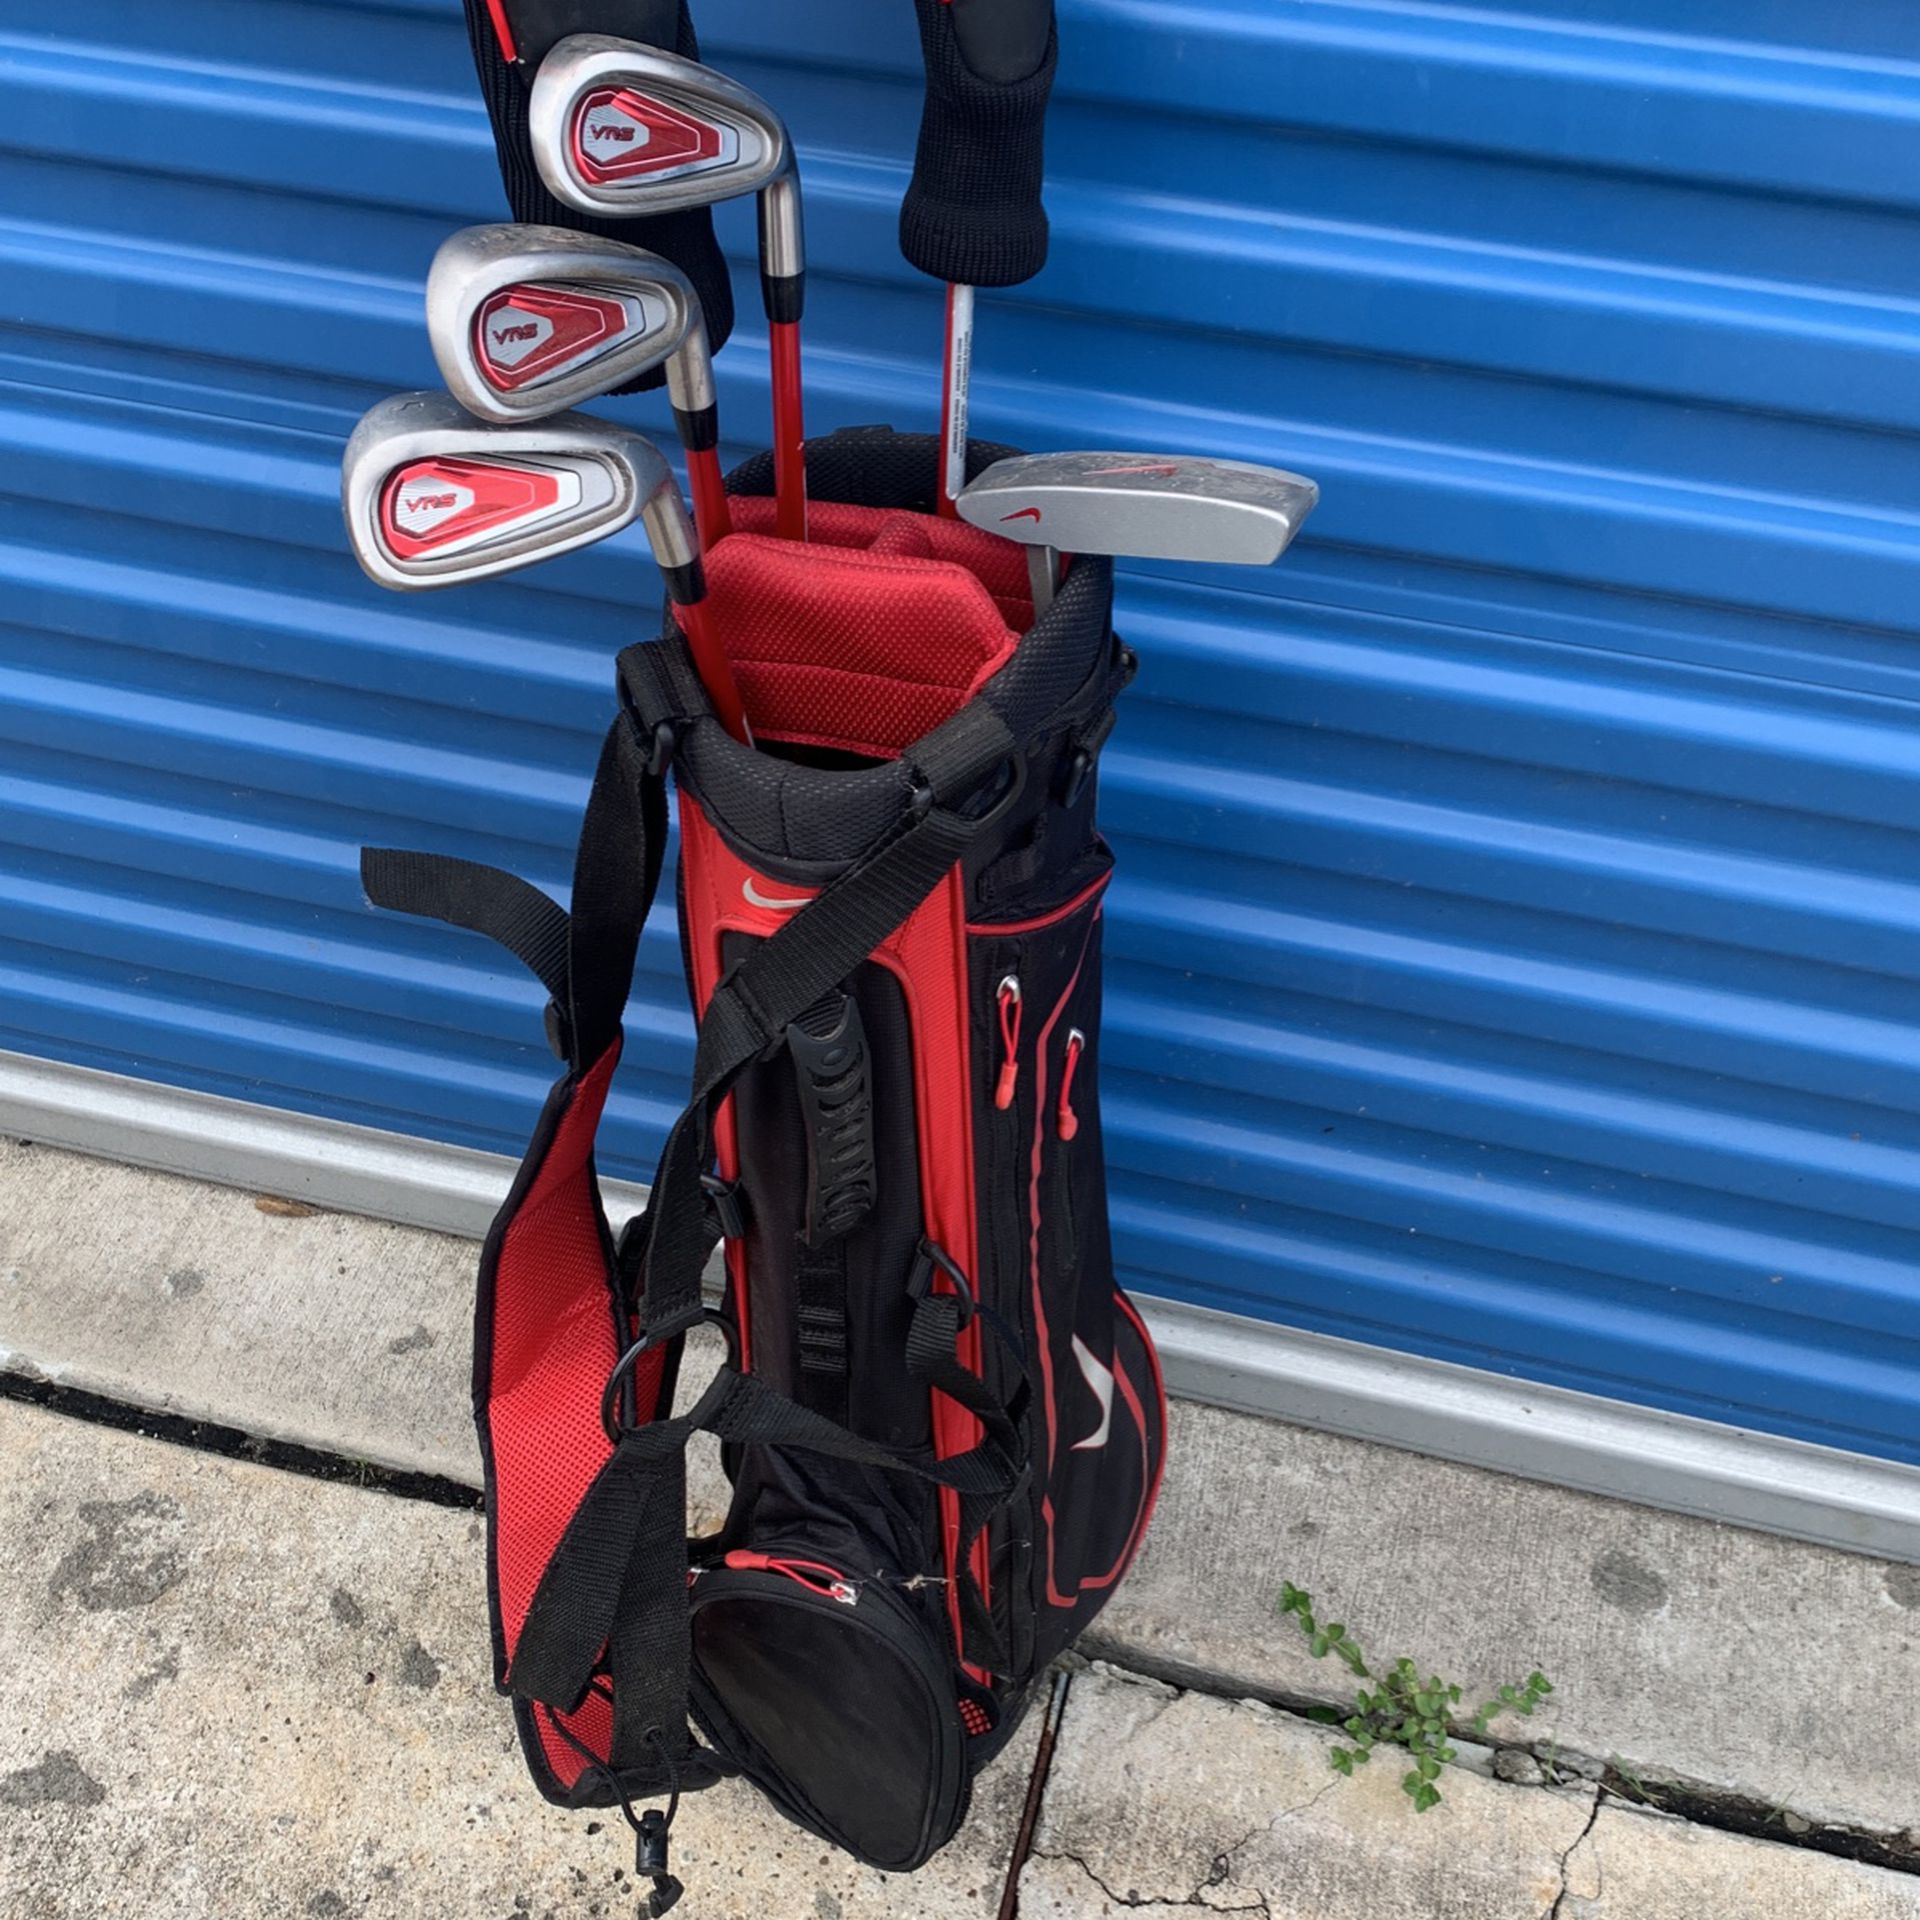 Nike Beginner VRS Golf Clubs With Bag.